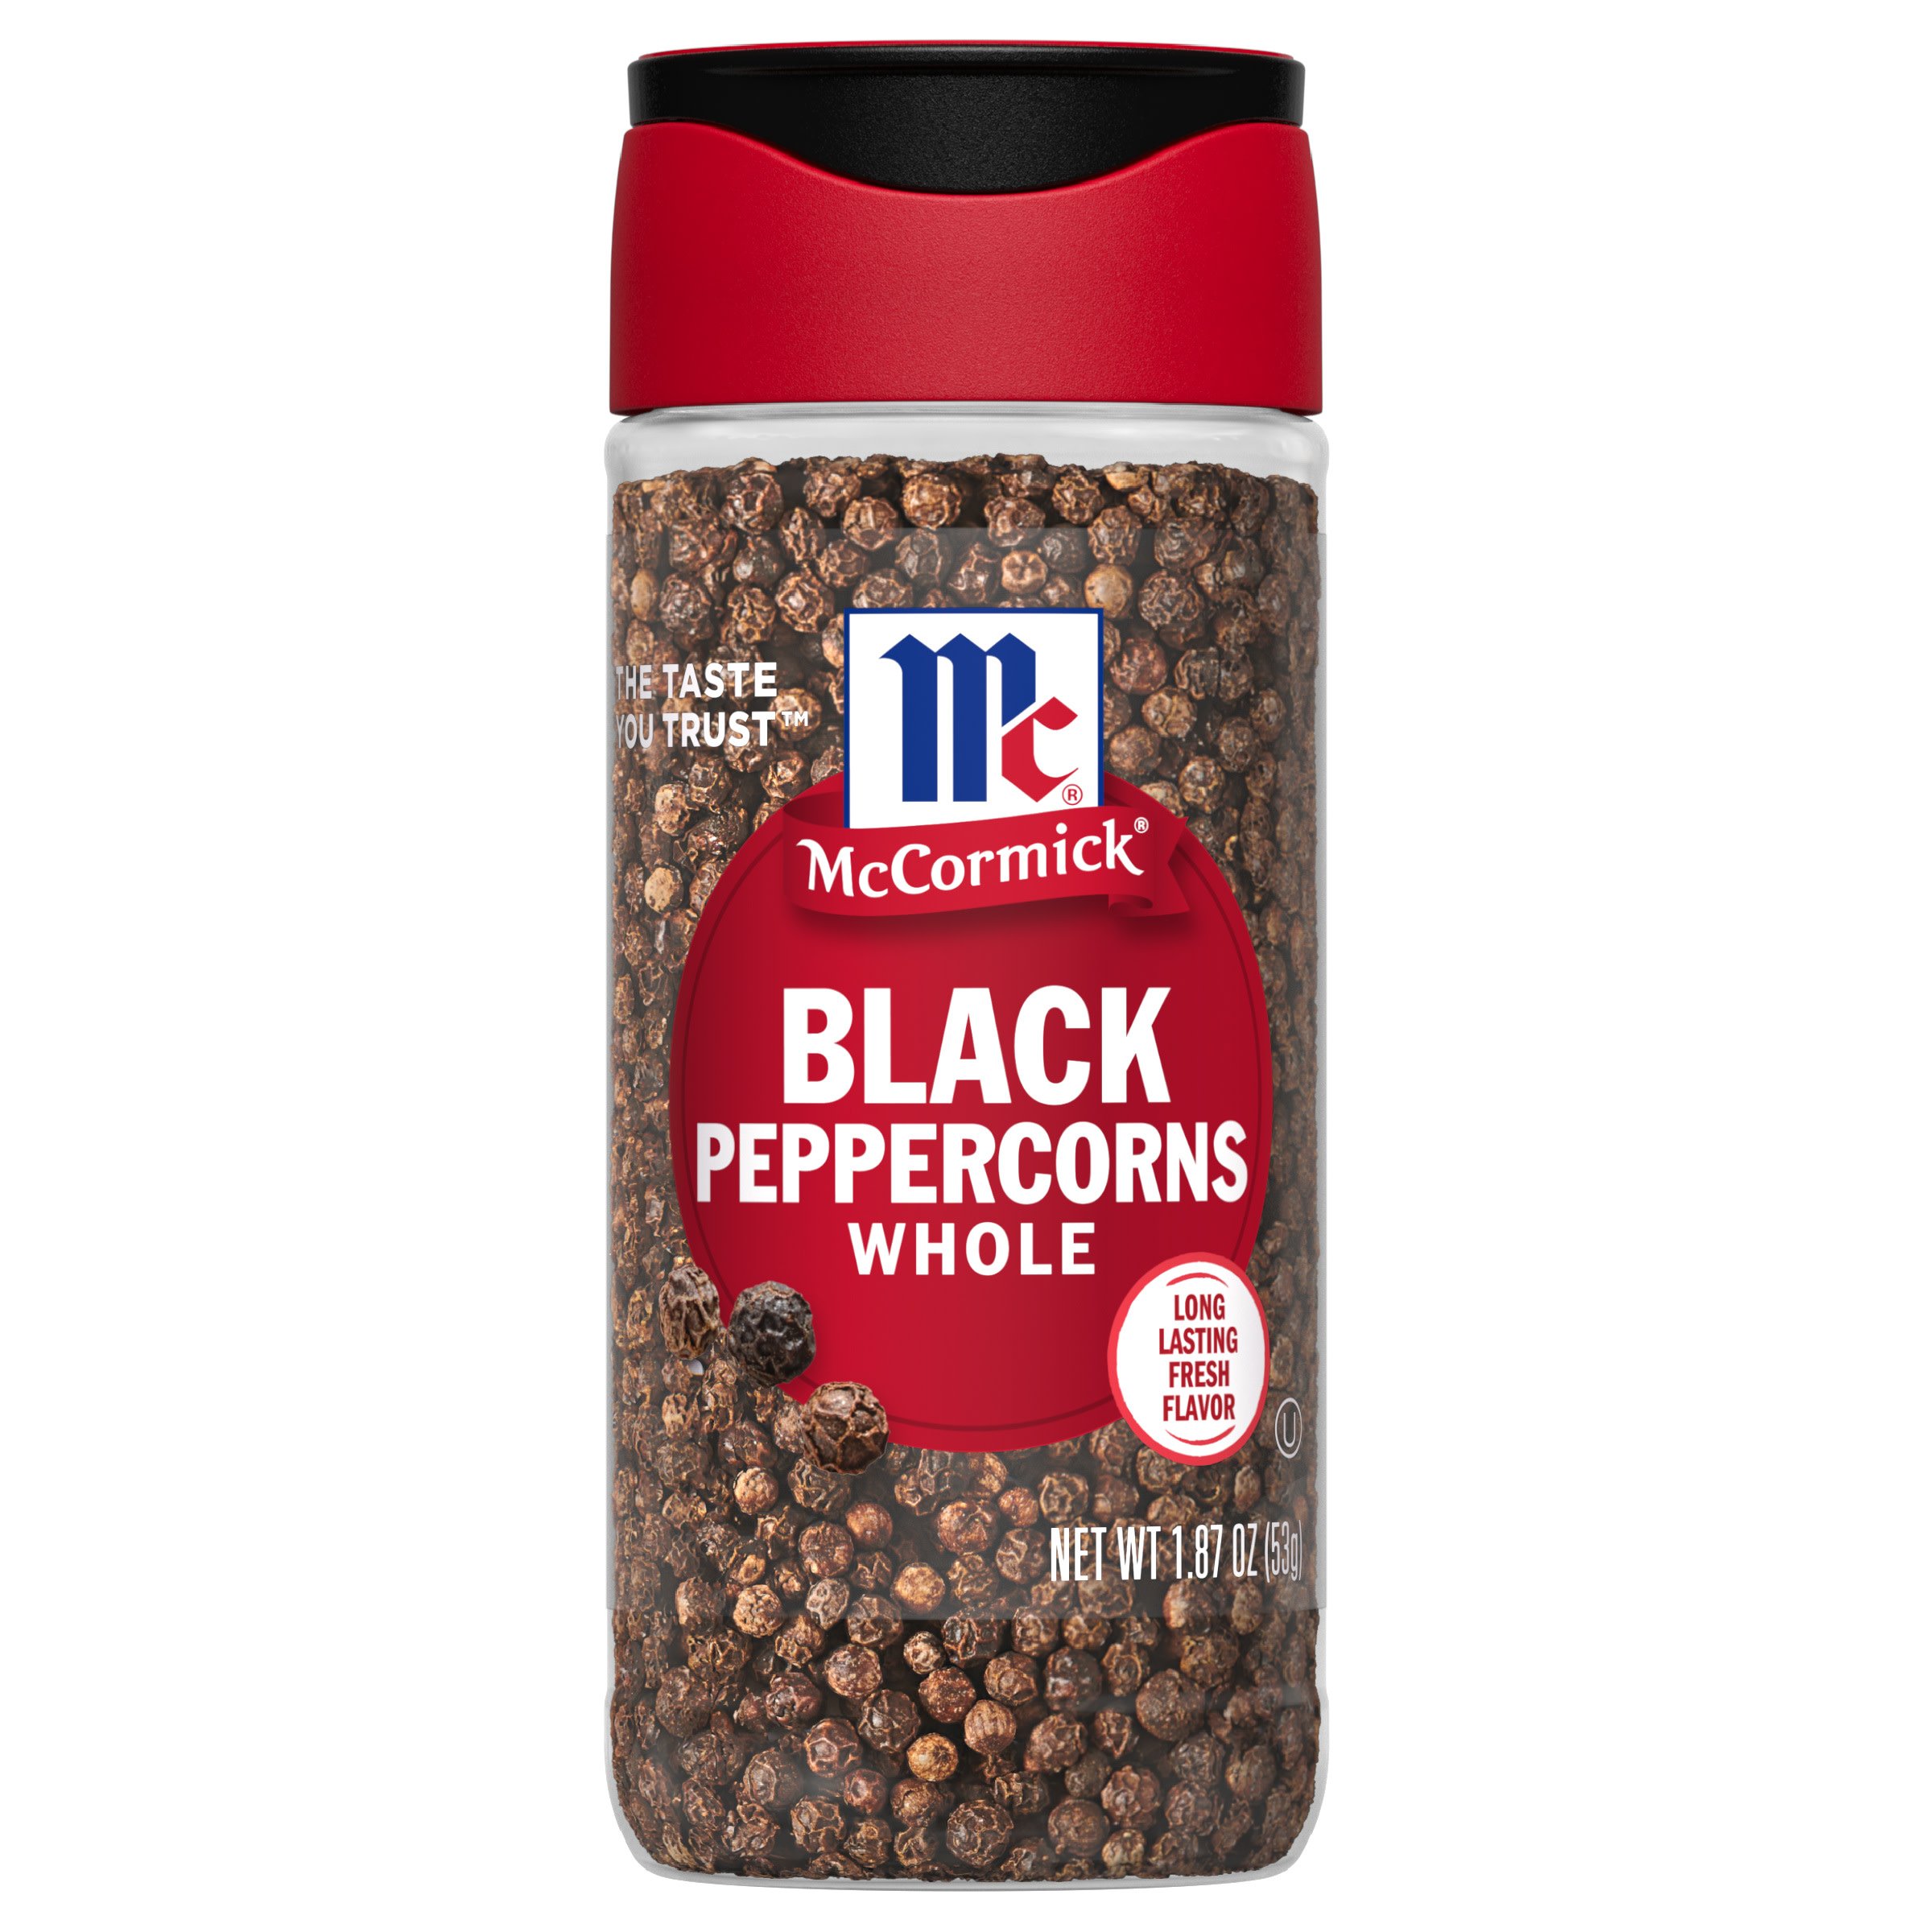 Whole Black Peppercorns